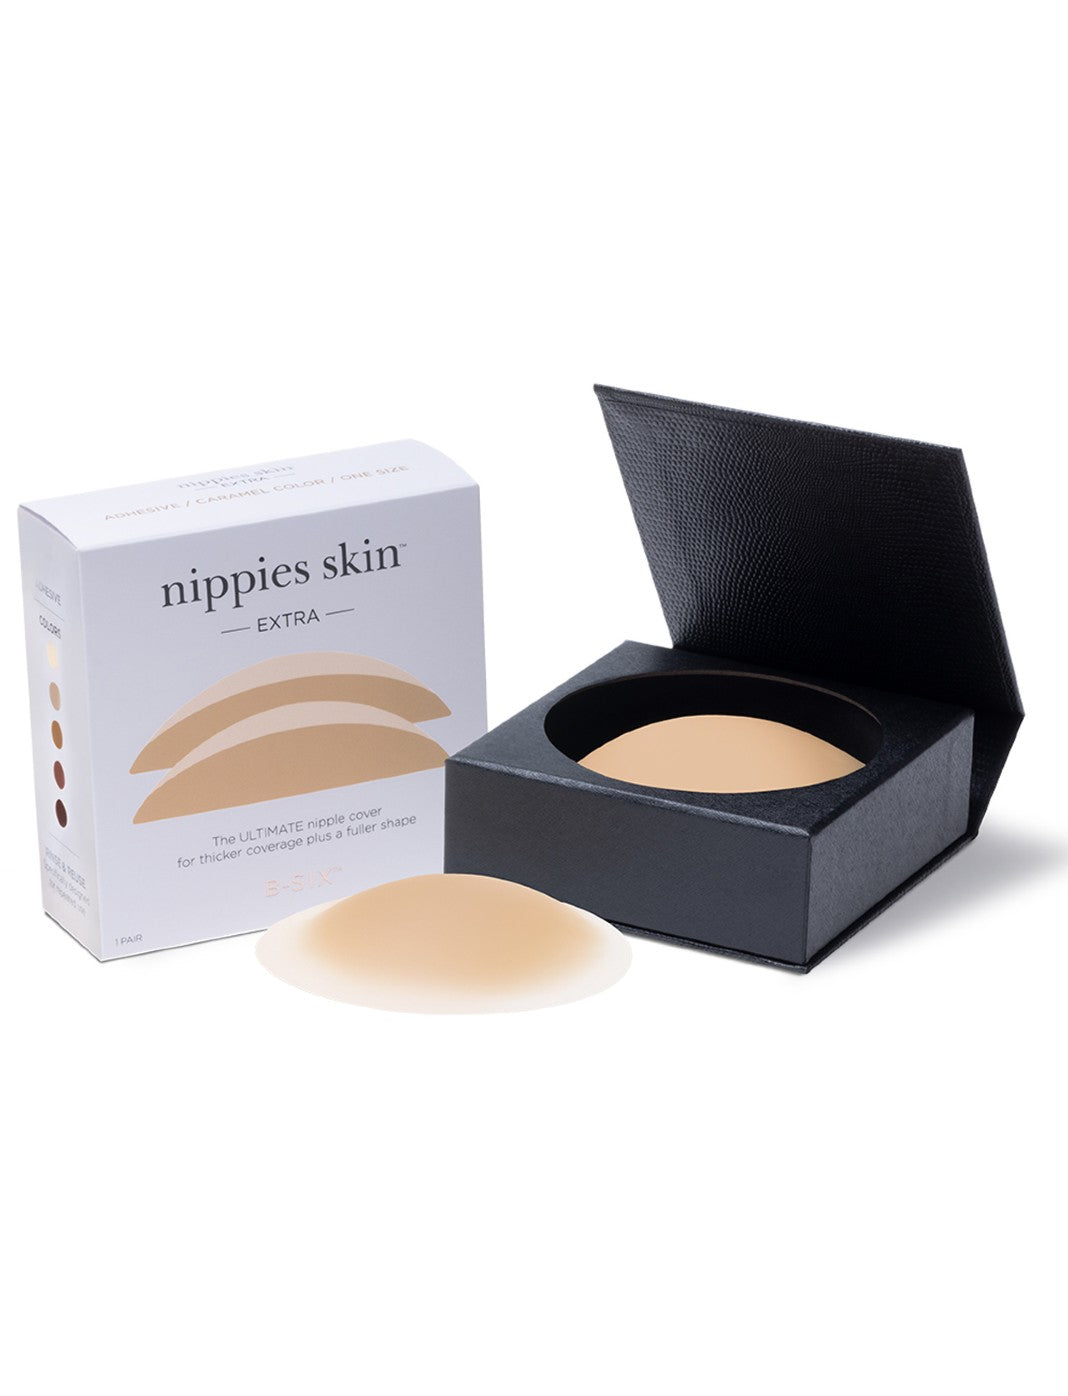 Nippies Skin Adhesive Nipple Cover - The Bra Room